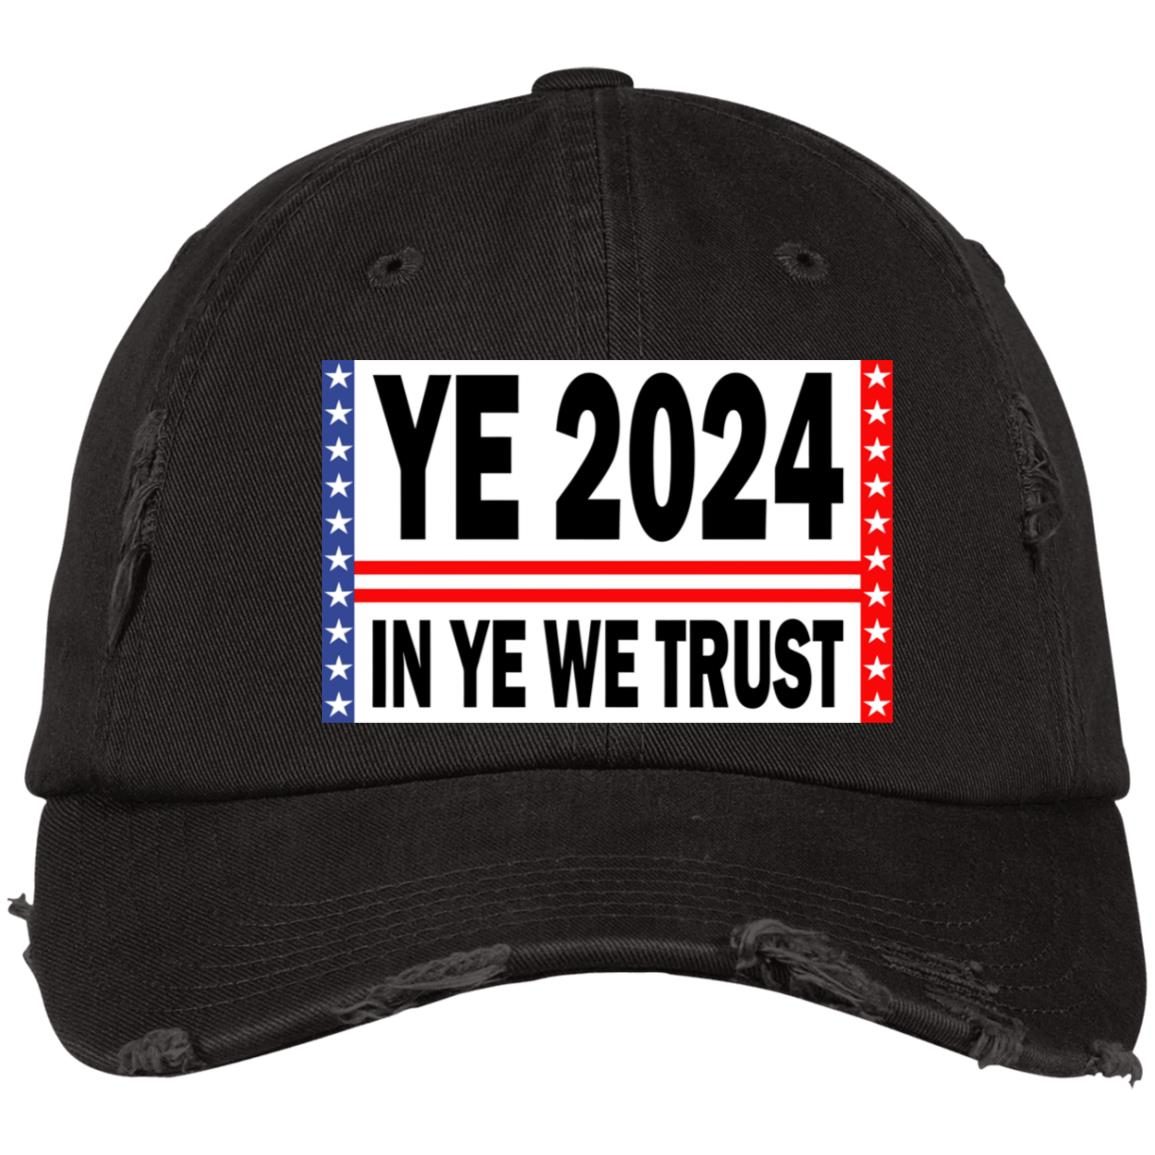 Ye 2024 in ye we trust hat cap